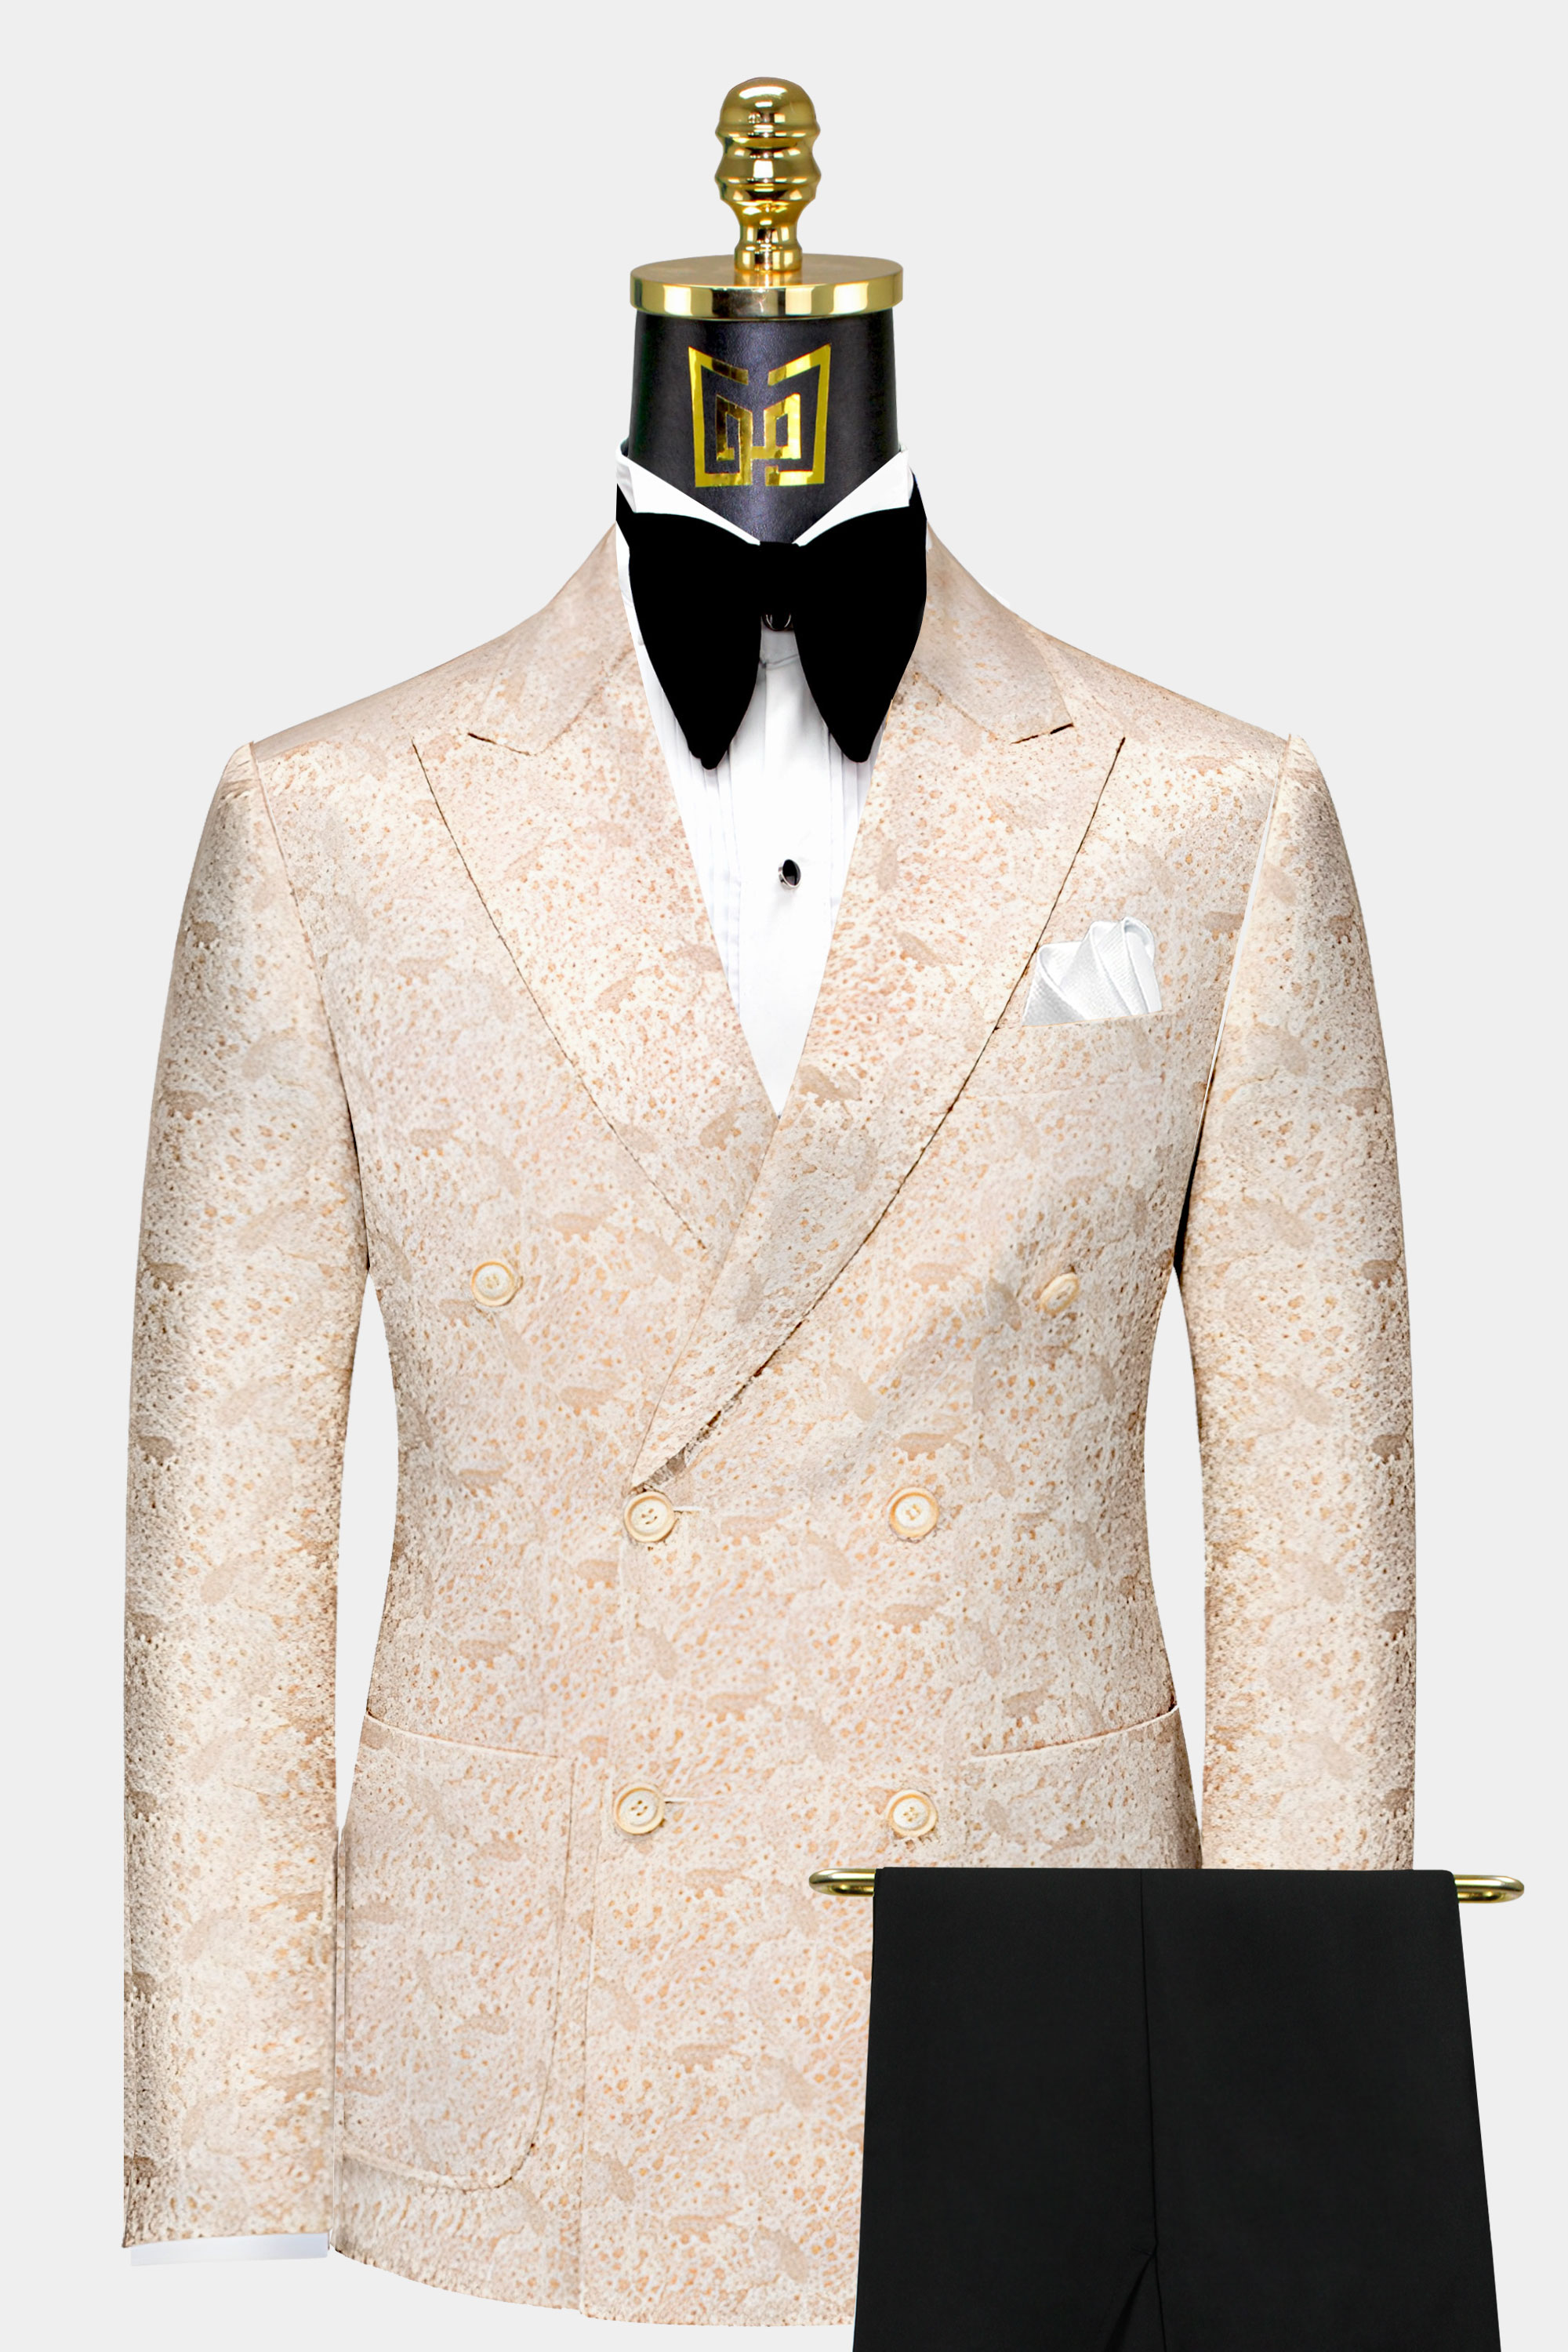 Black-Pant-Double-Breasted-Champagne-Paisley-Suit-Groom-Wedding-Prom-Tuxedo-from-Gentlemansguru.com